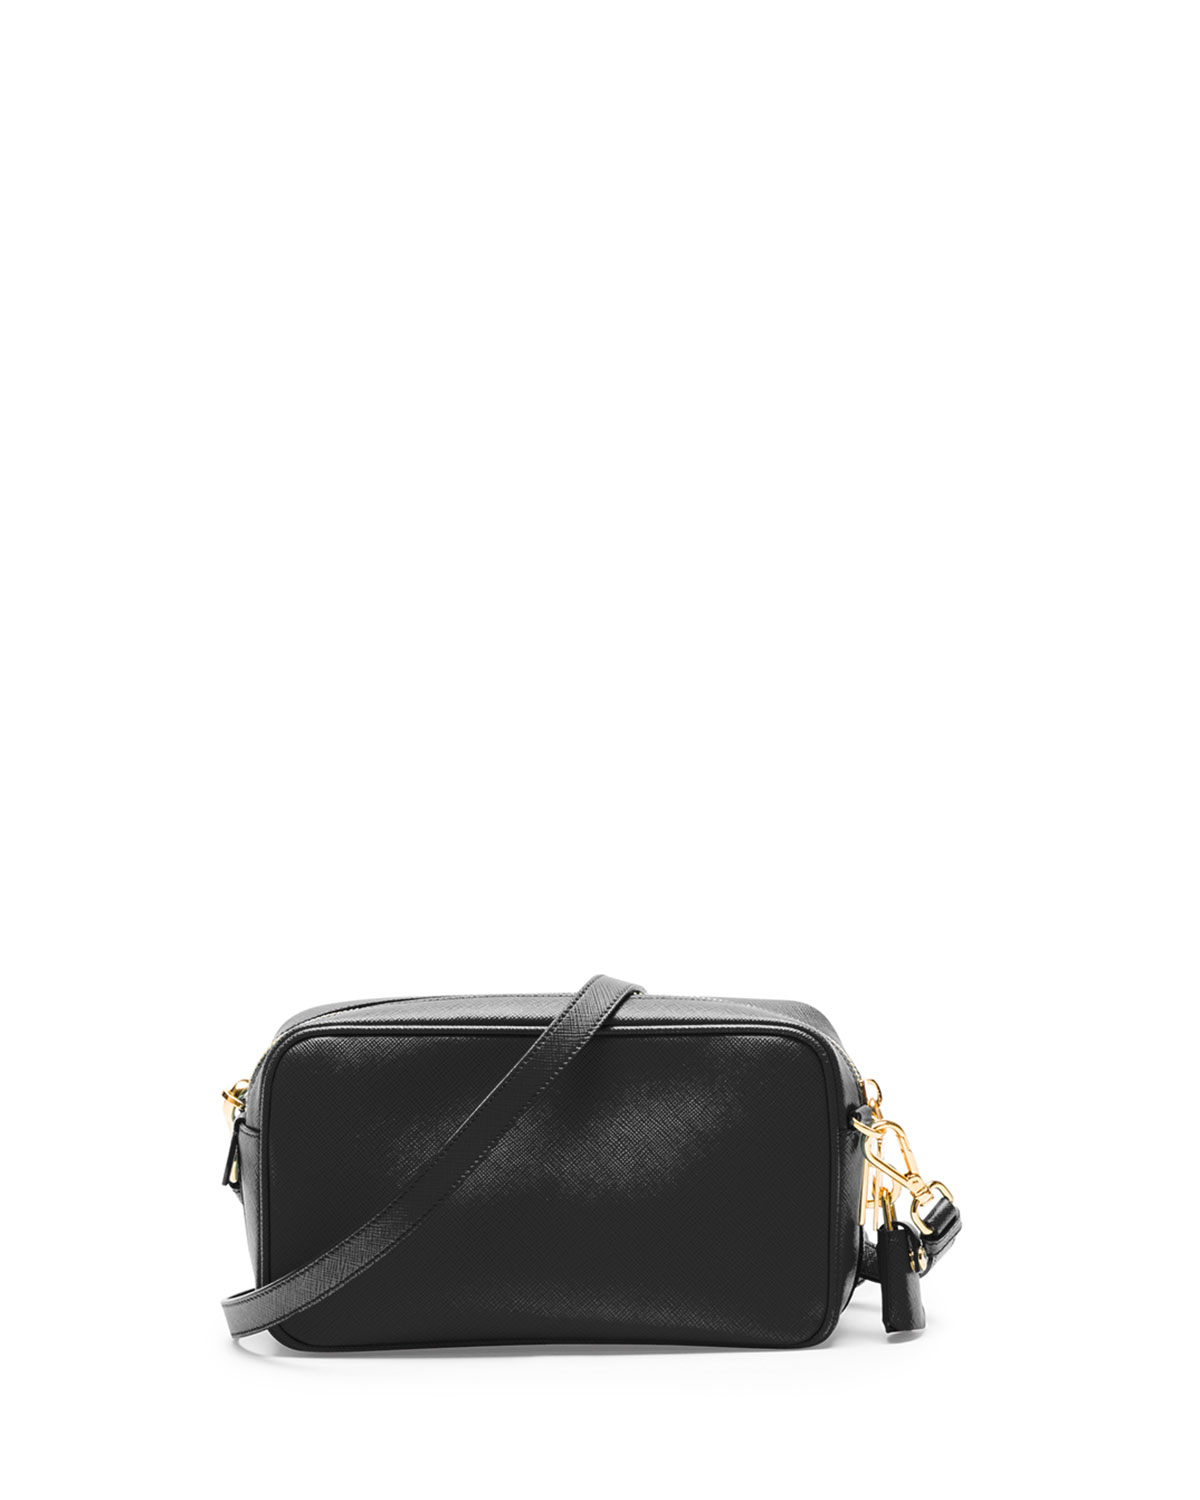 Lyst - Prada Saffiano Mini Crossbody Bag in Black